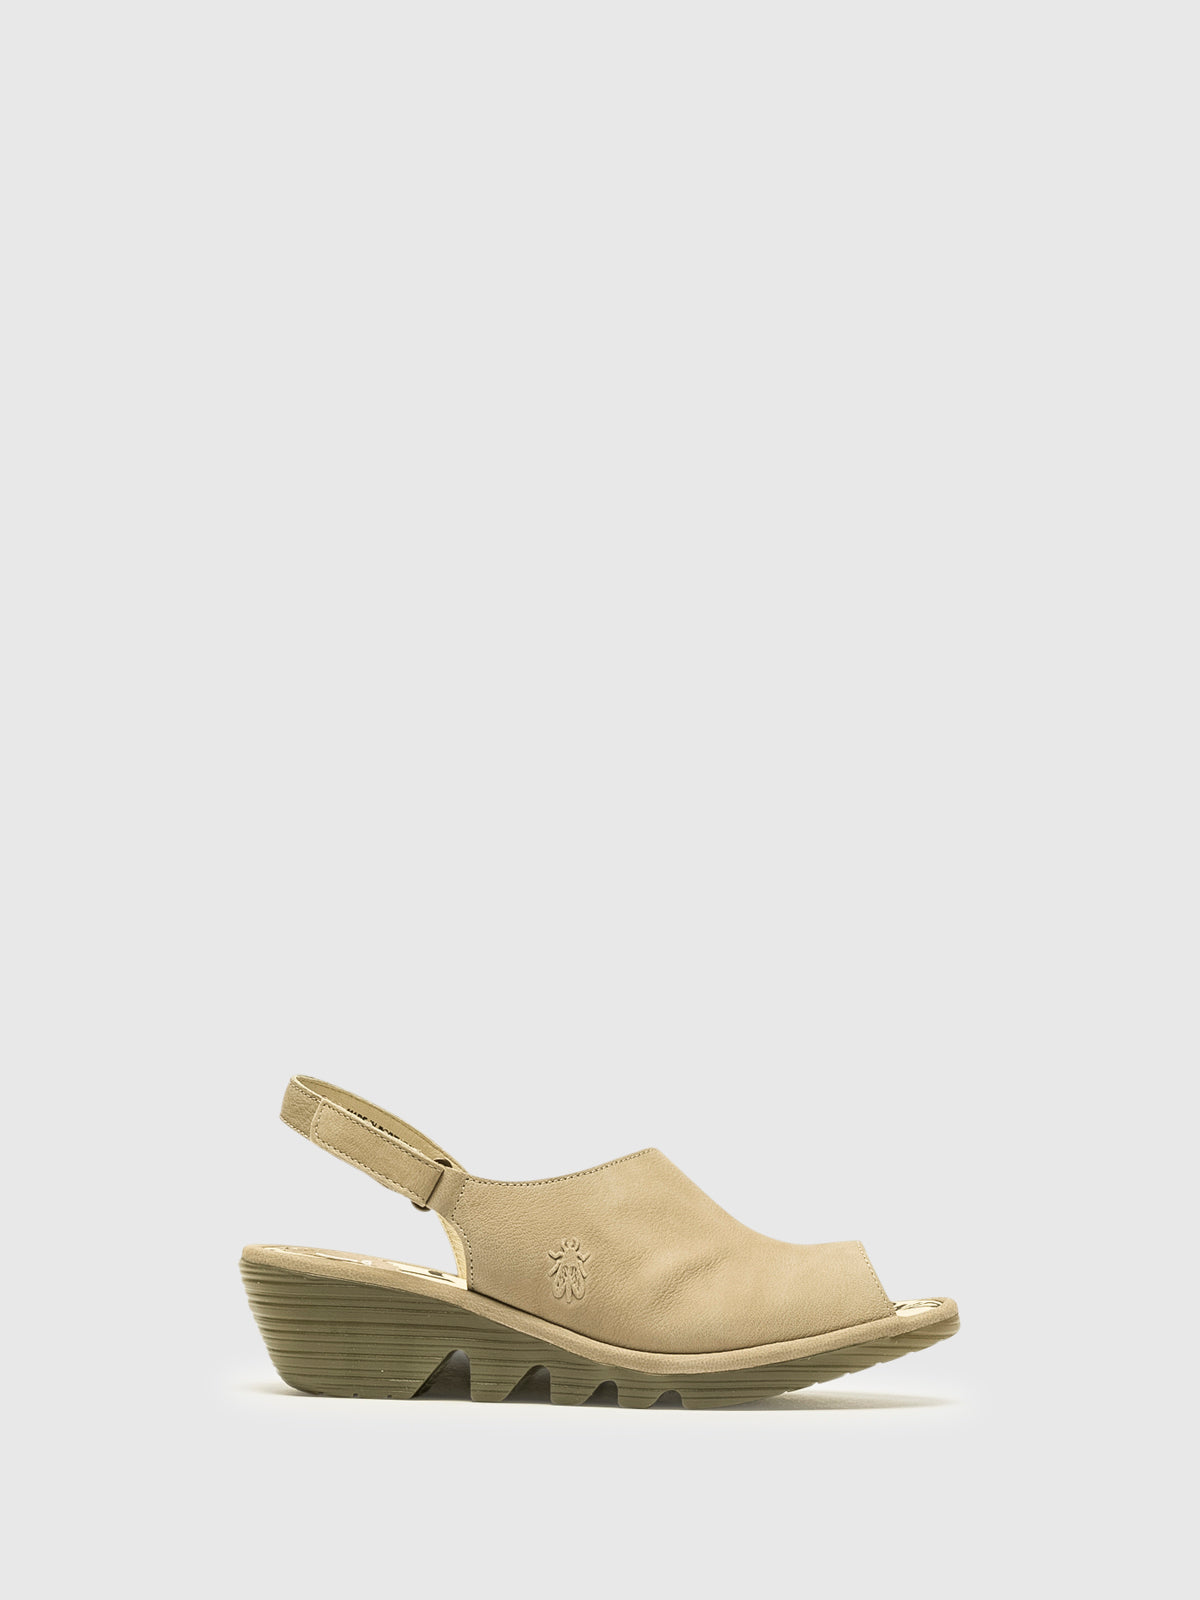 Fly London Tan Velcro Sandals